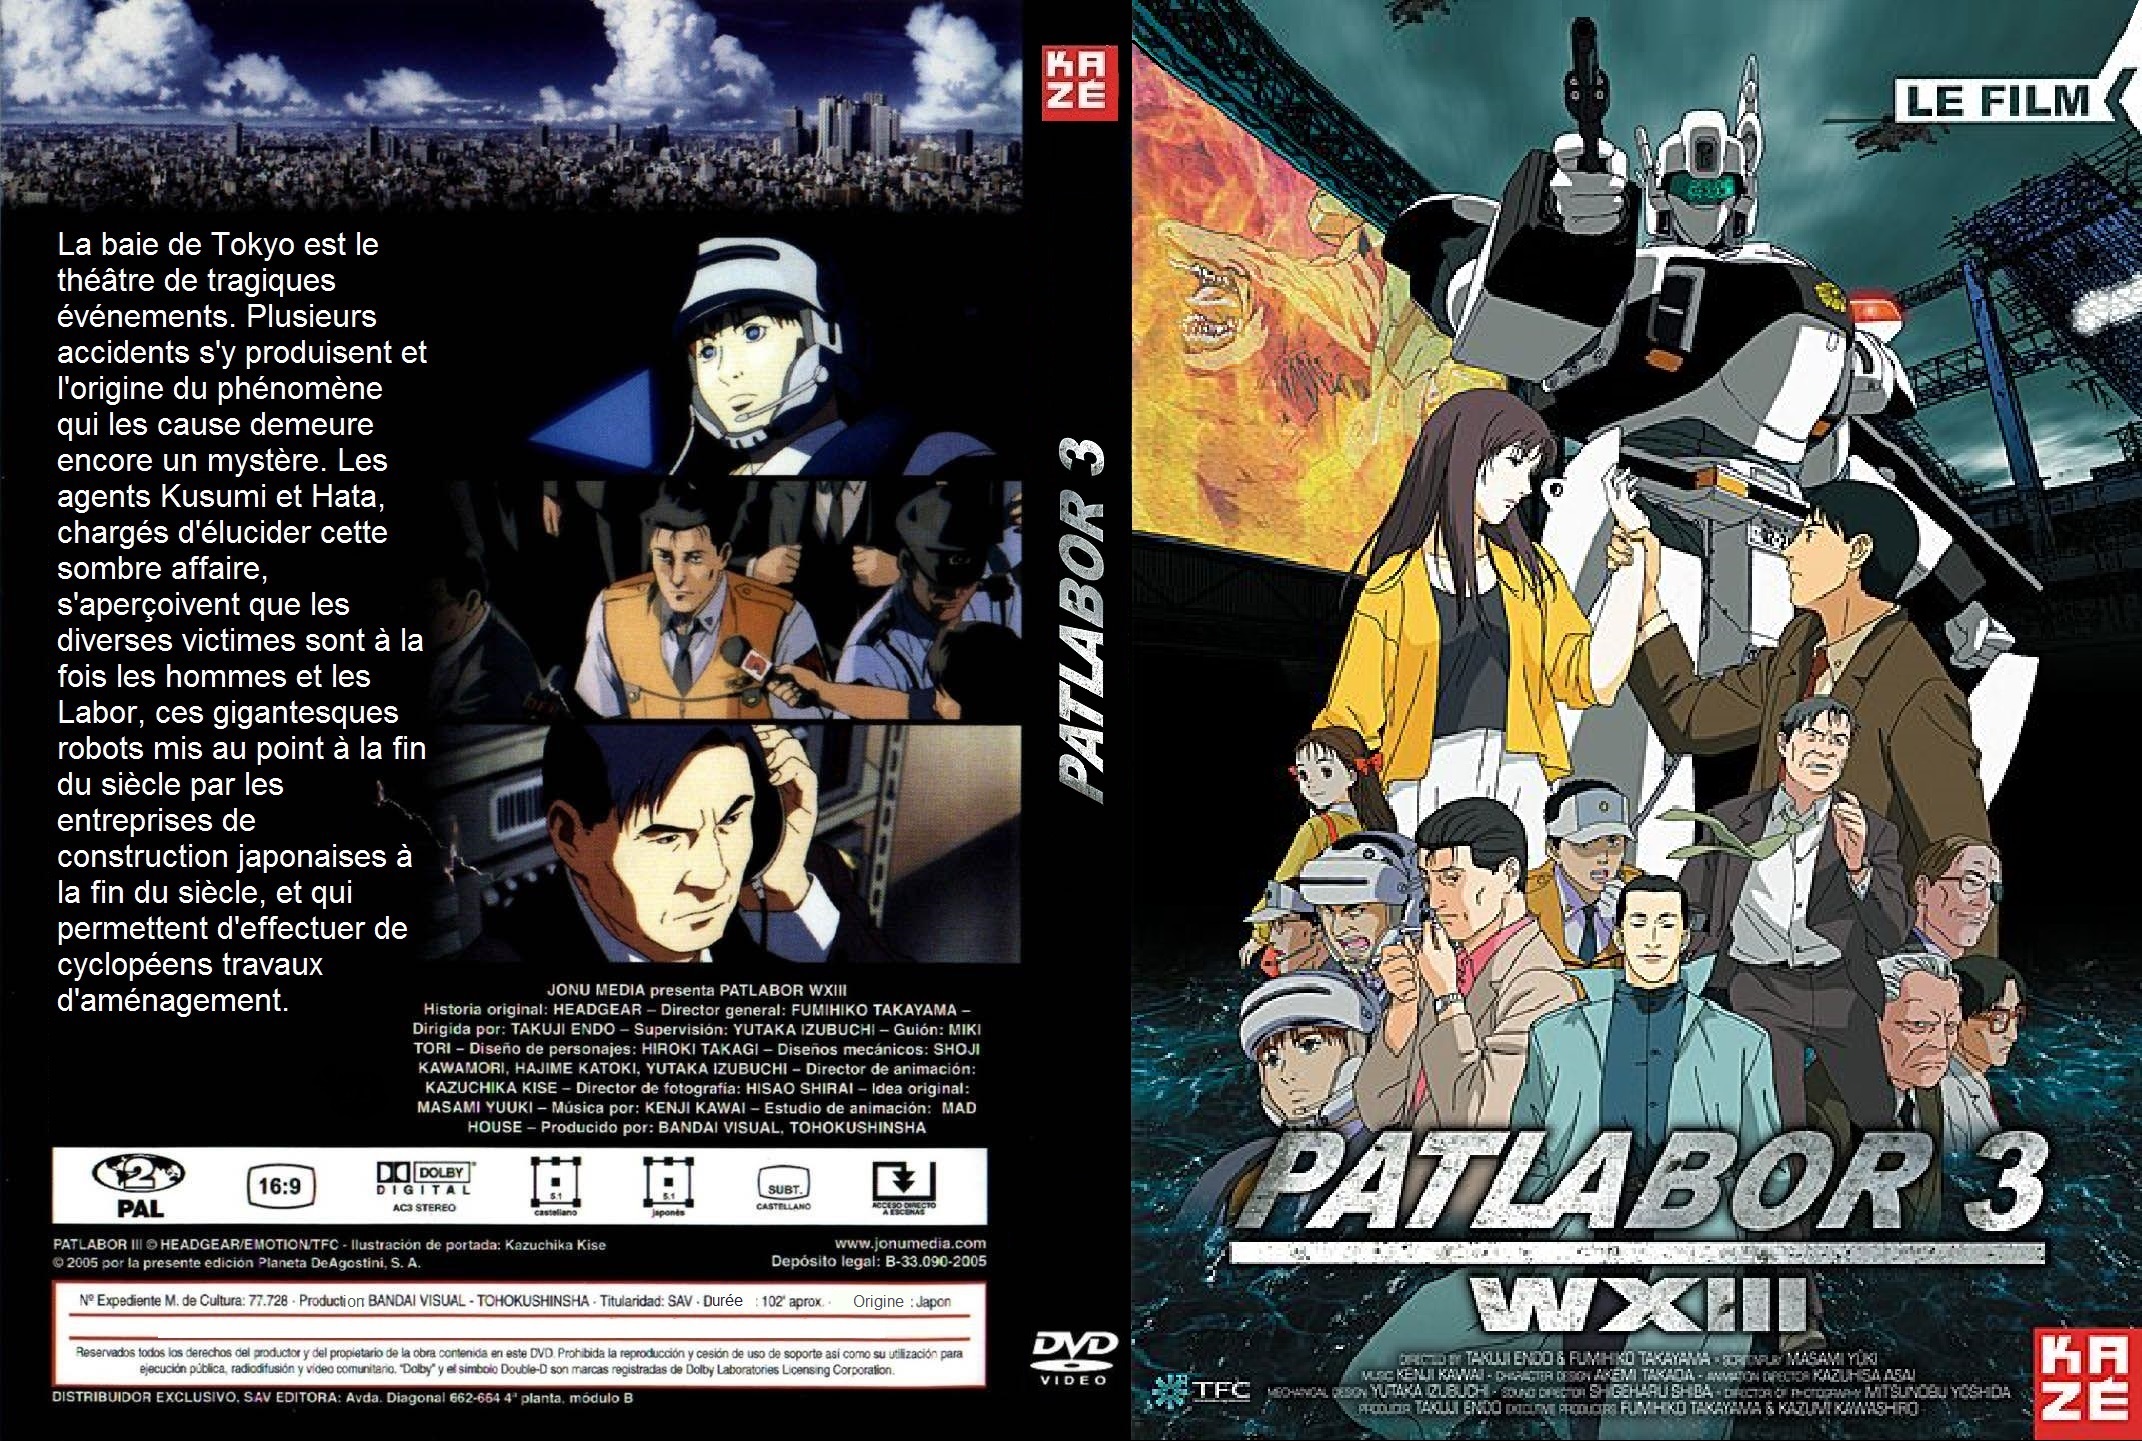 Jaquette DVD Patlabor 3-WXIII custom